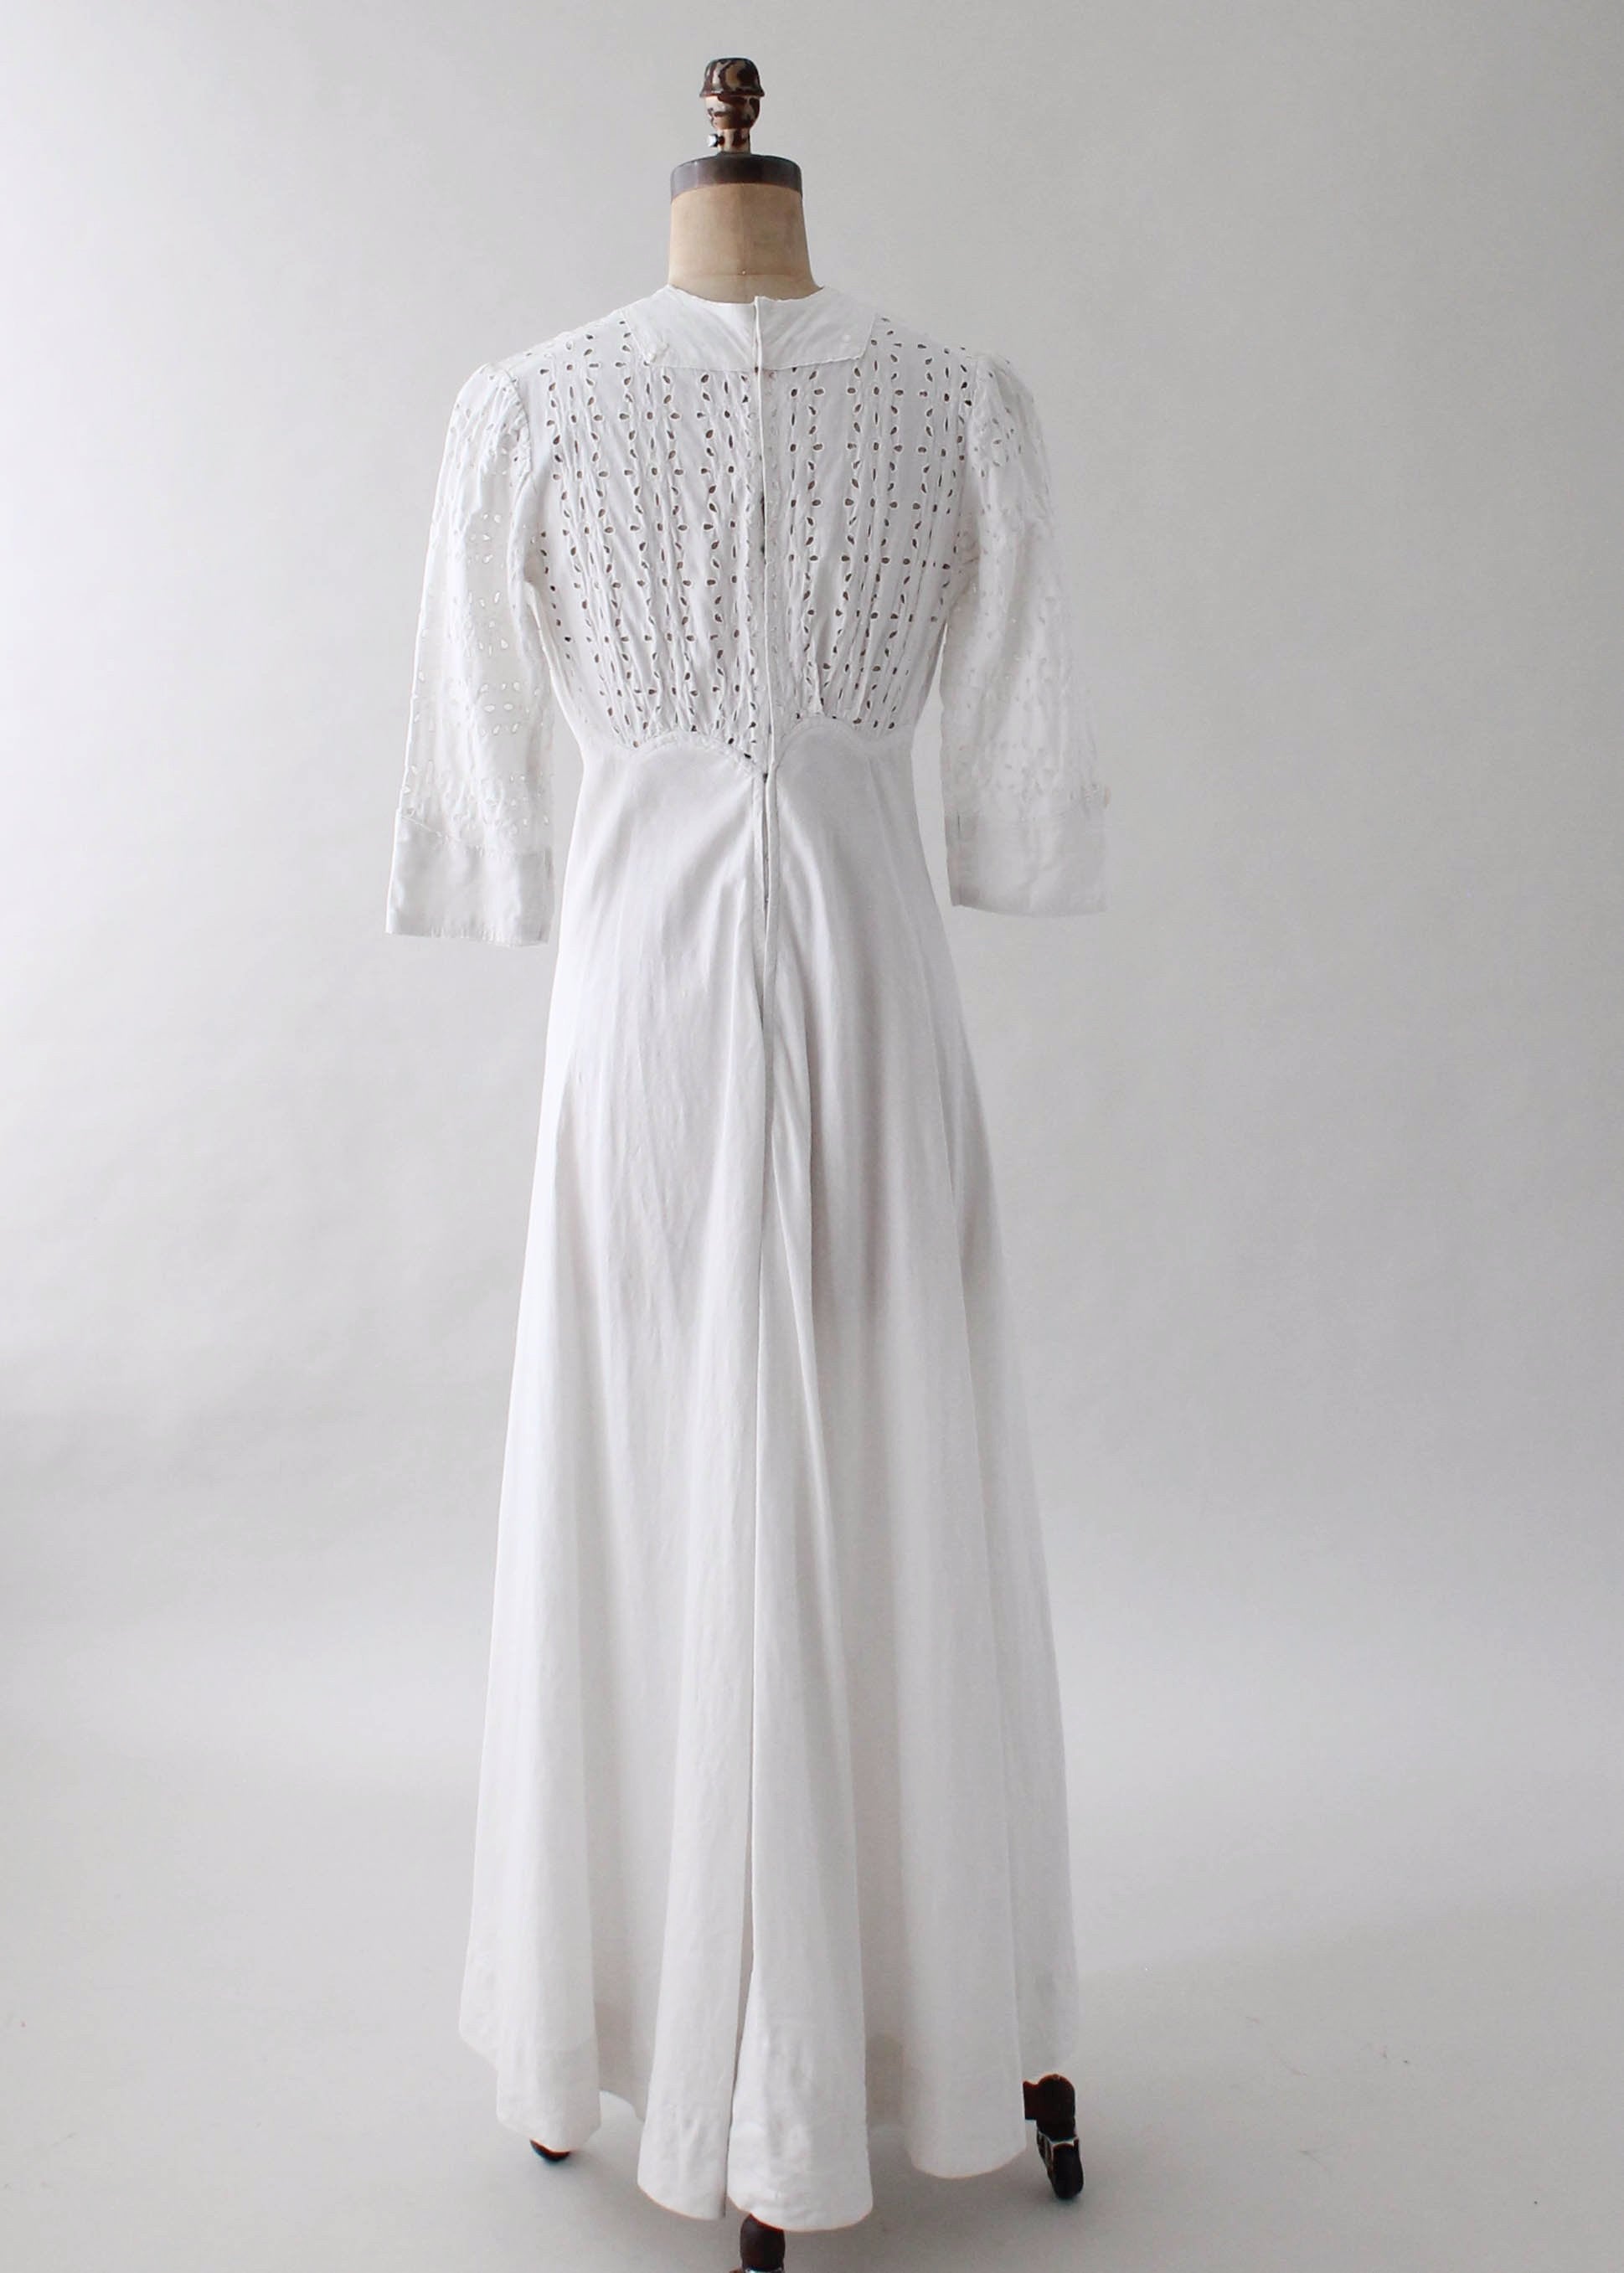 Antique 1910s Edwardian Cotton Lawn Dress - Raleigh Vintage